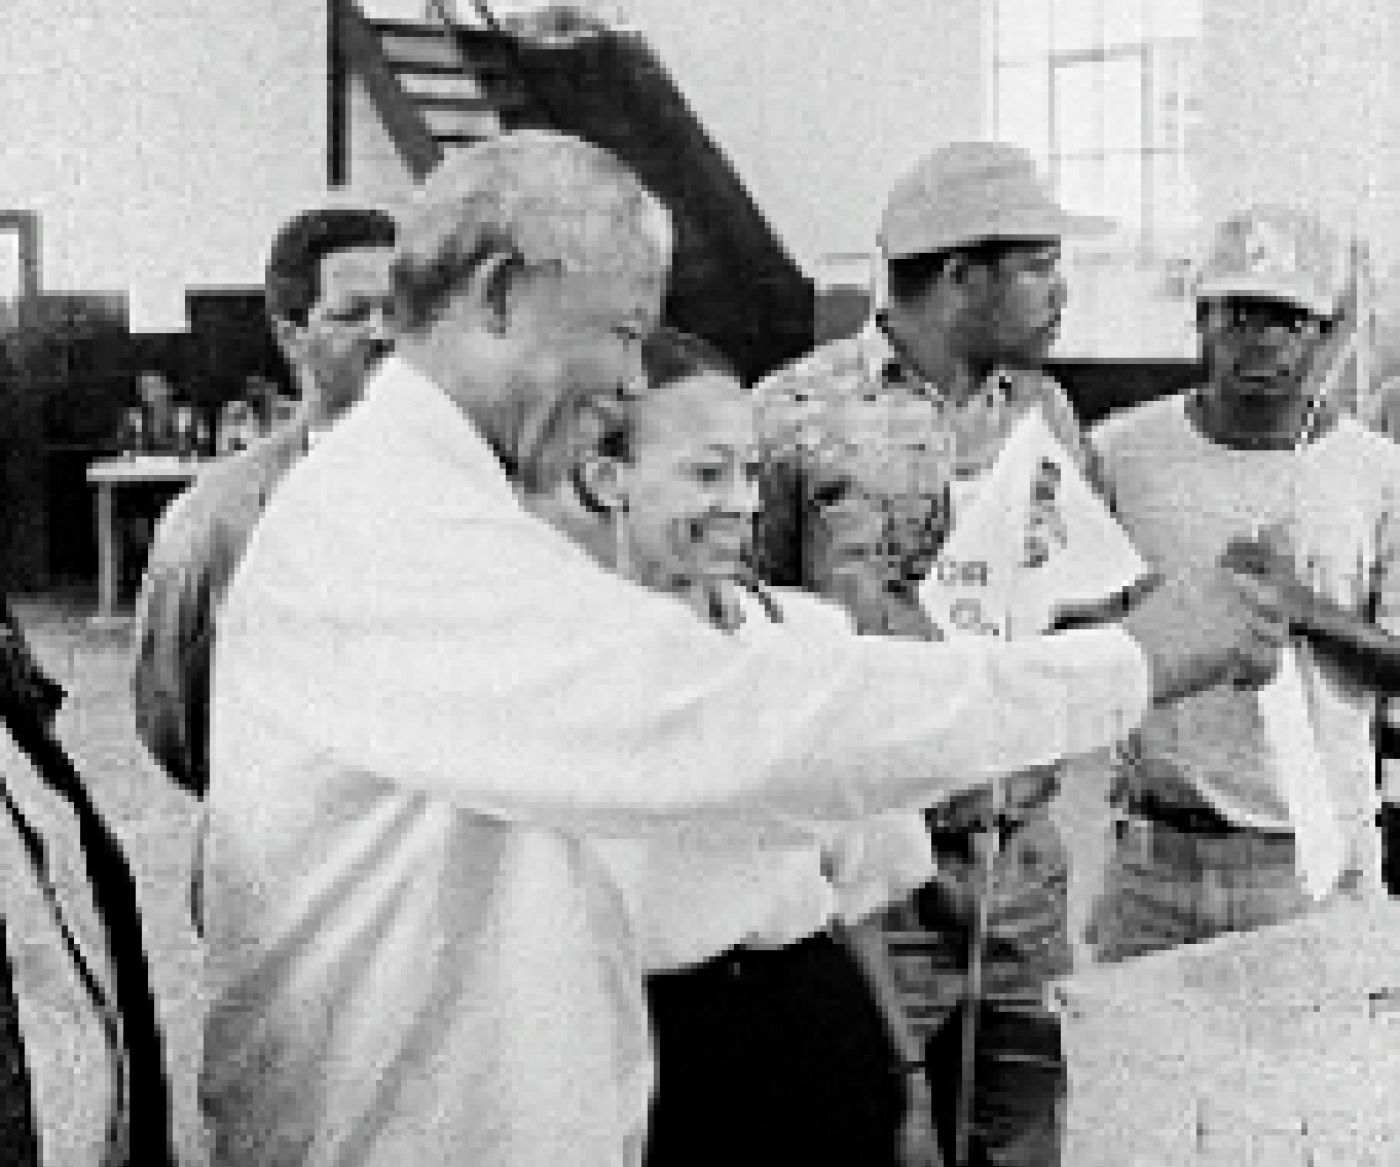 Nelson  Mandela Voting 1994